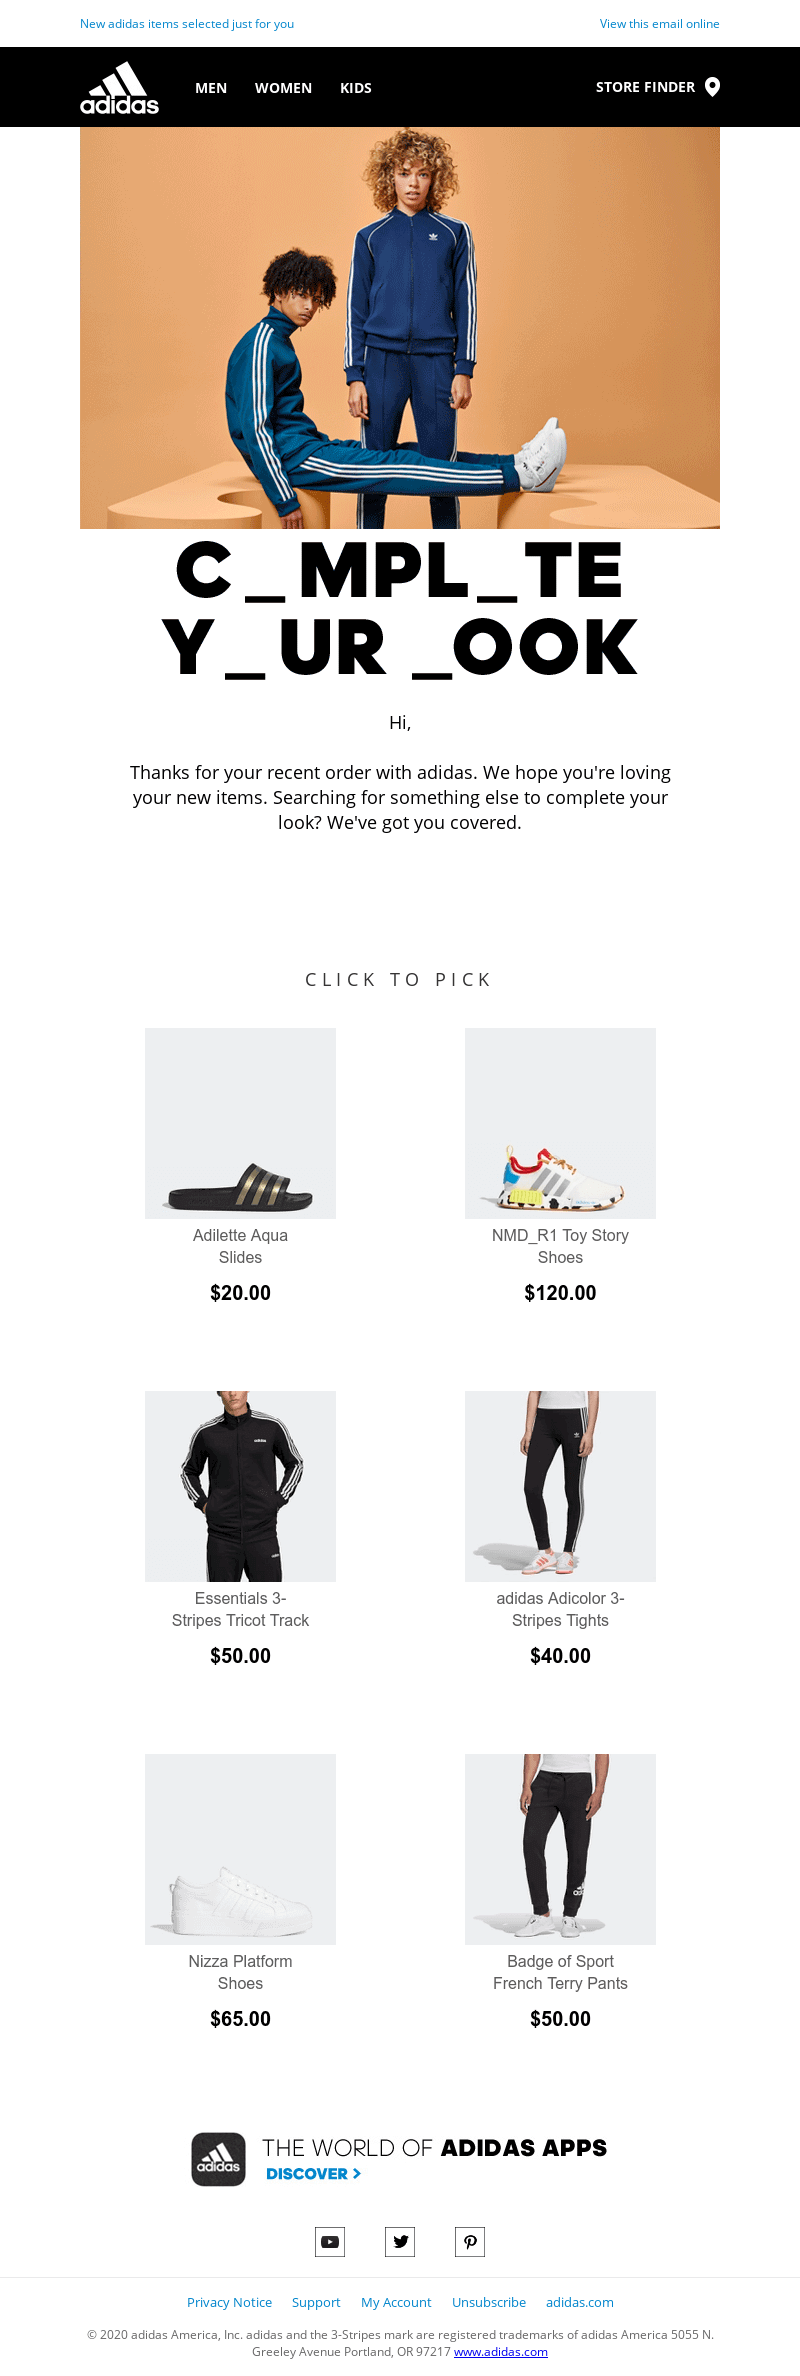 Adidas upsell email